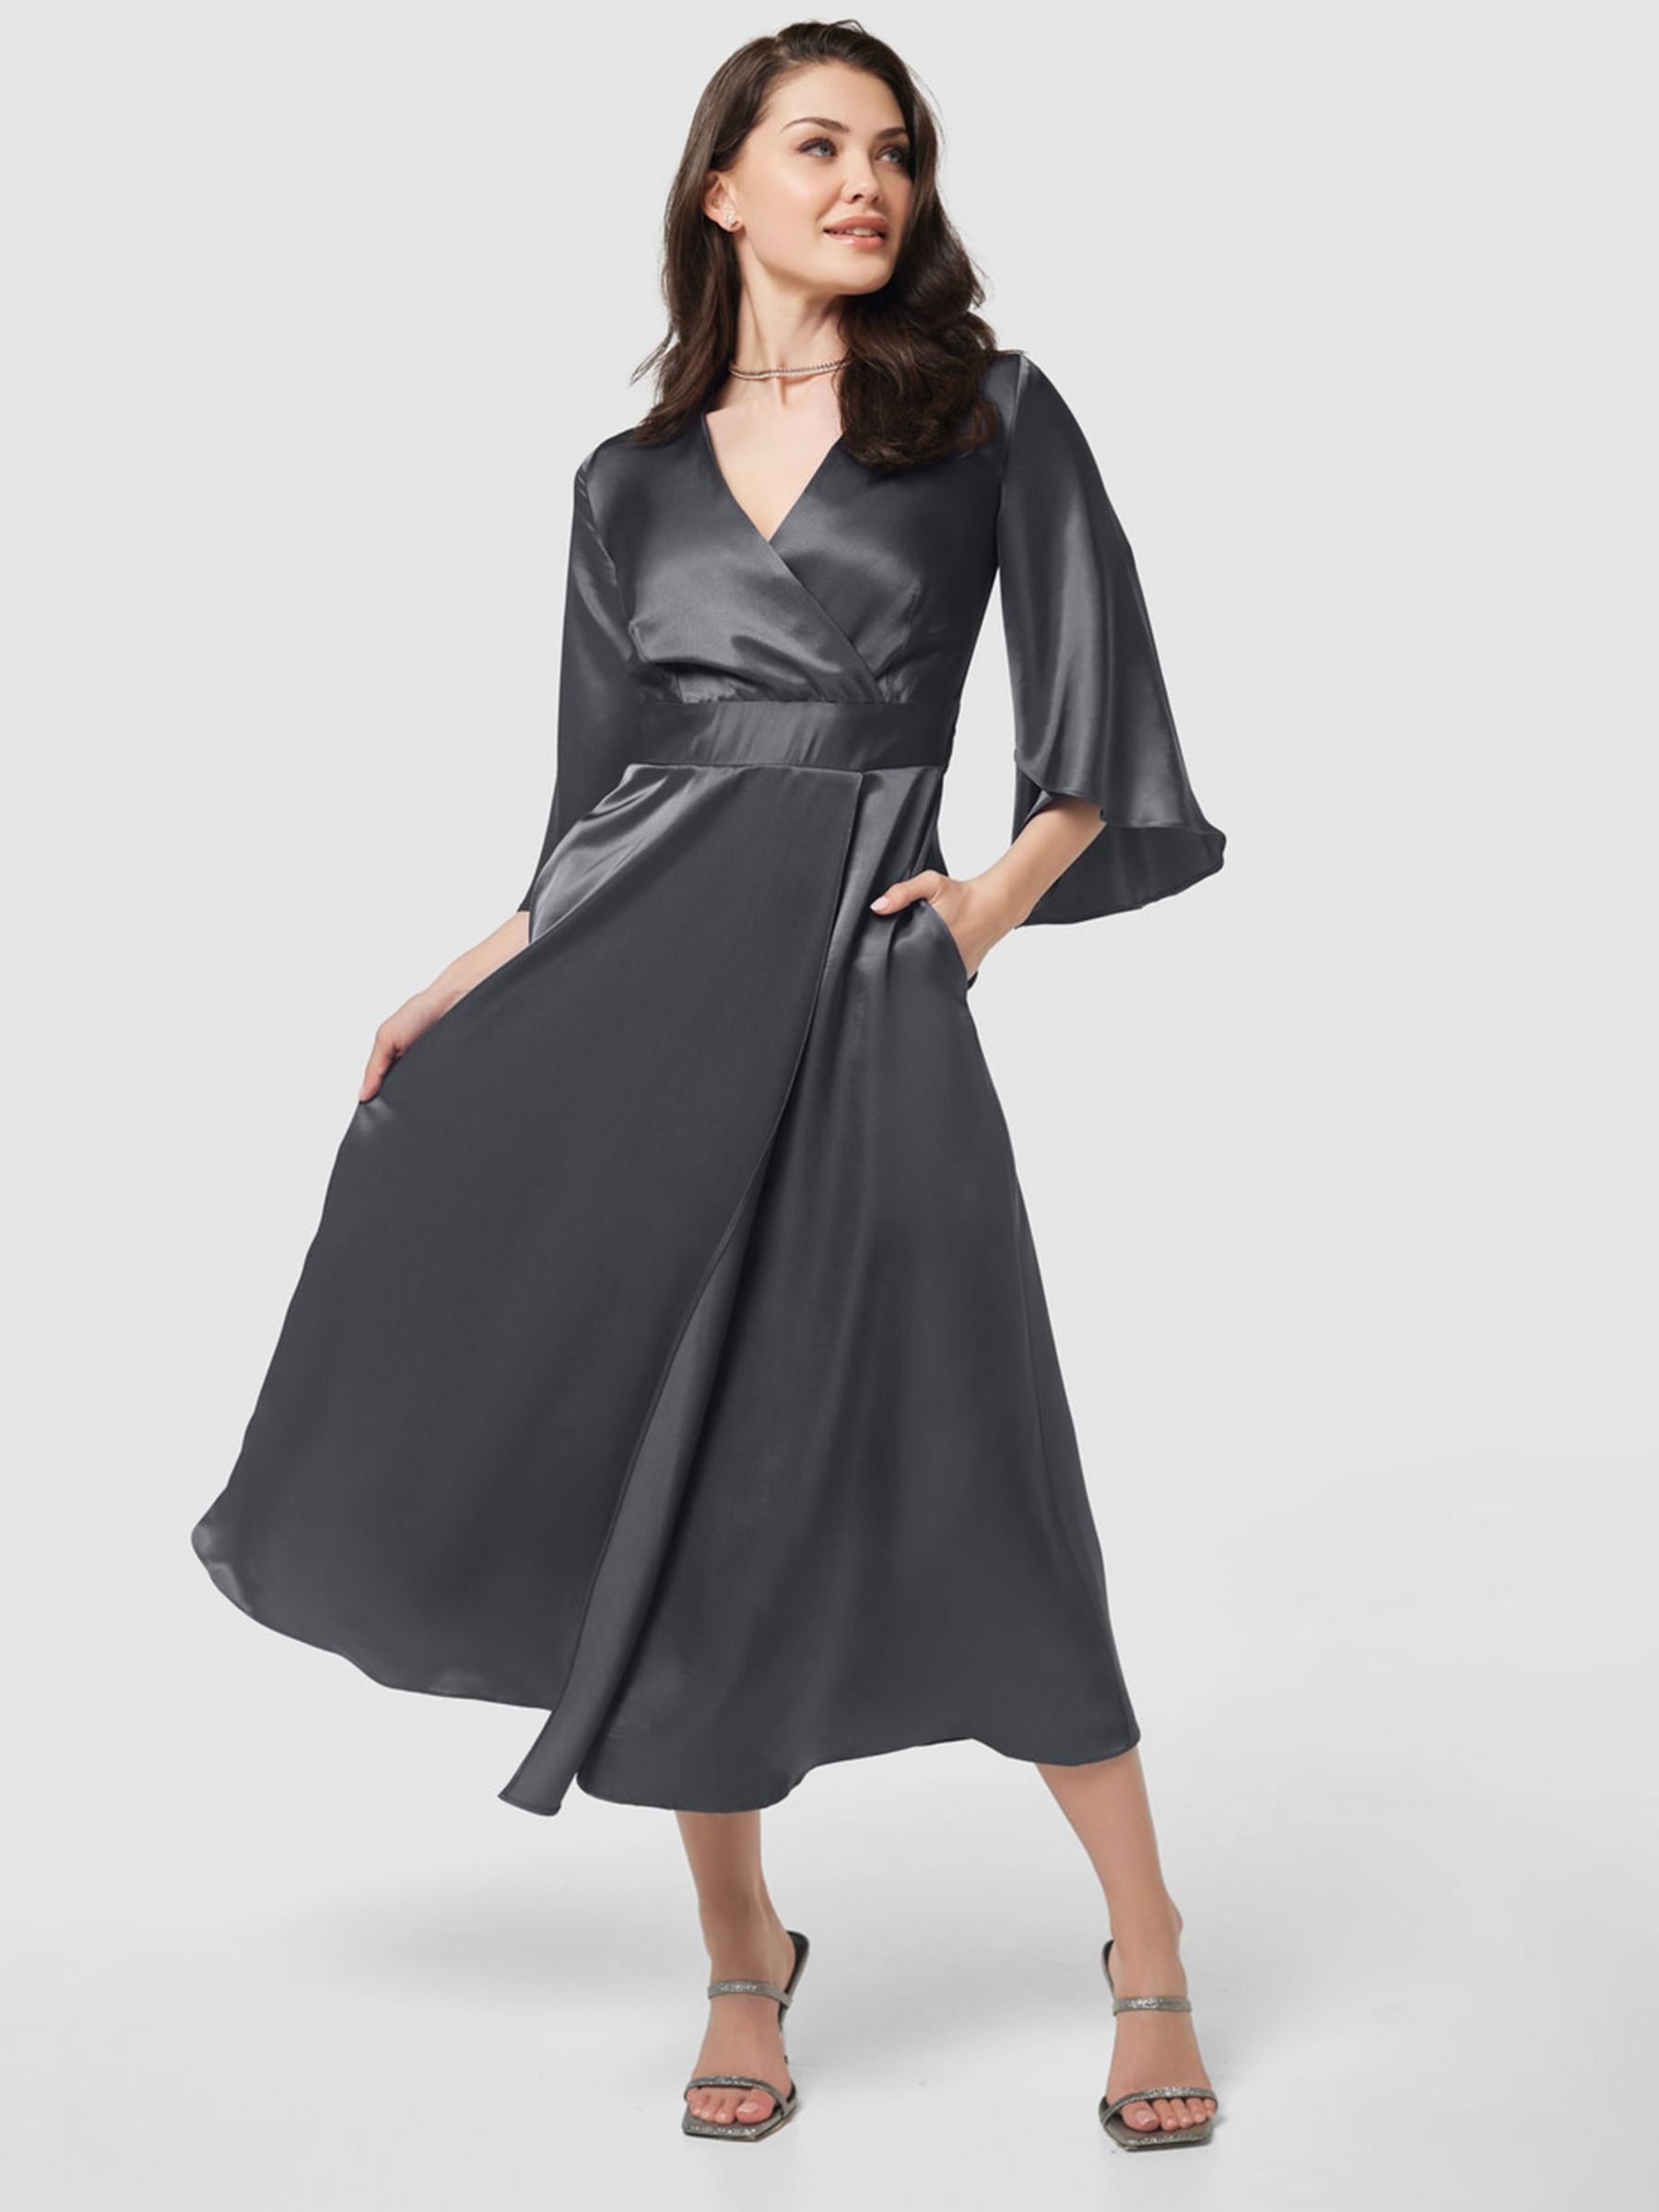 Closet London Satin Wrap Midi Dress, Grey, 10